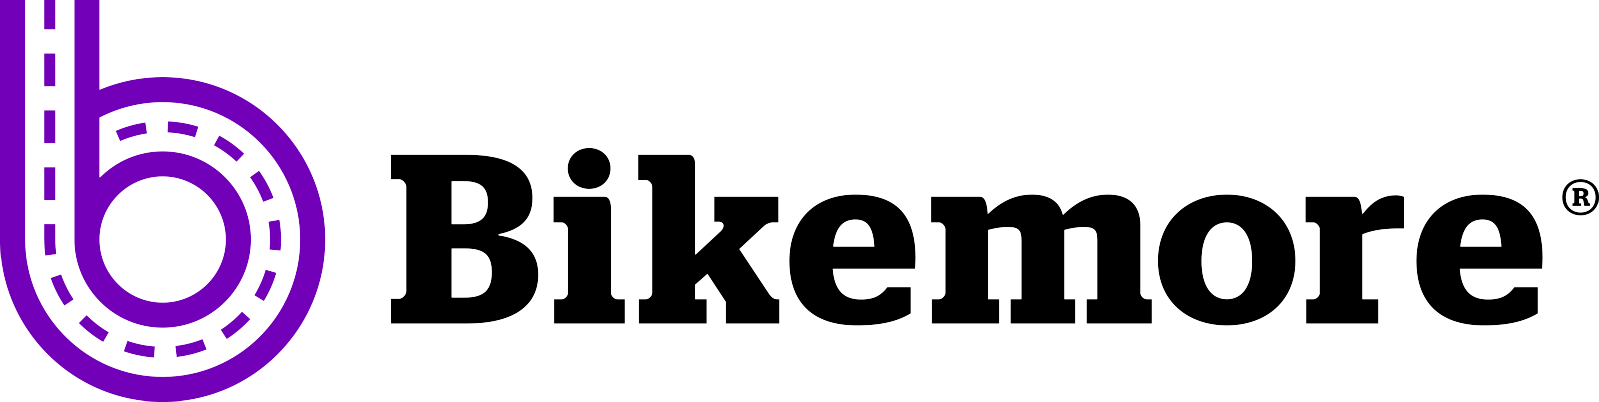 Bikemore logo_transparent.png